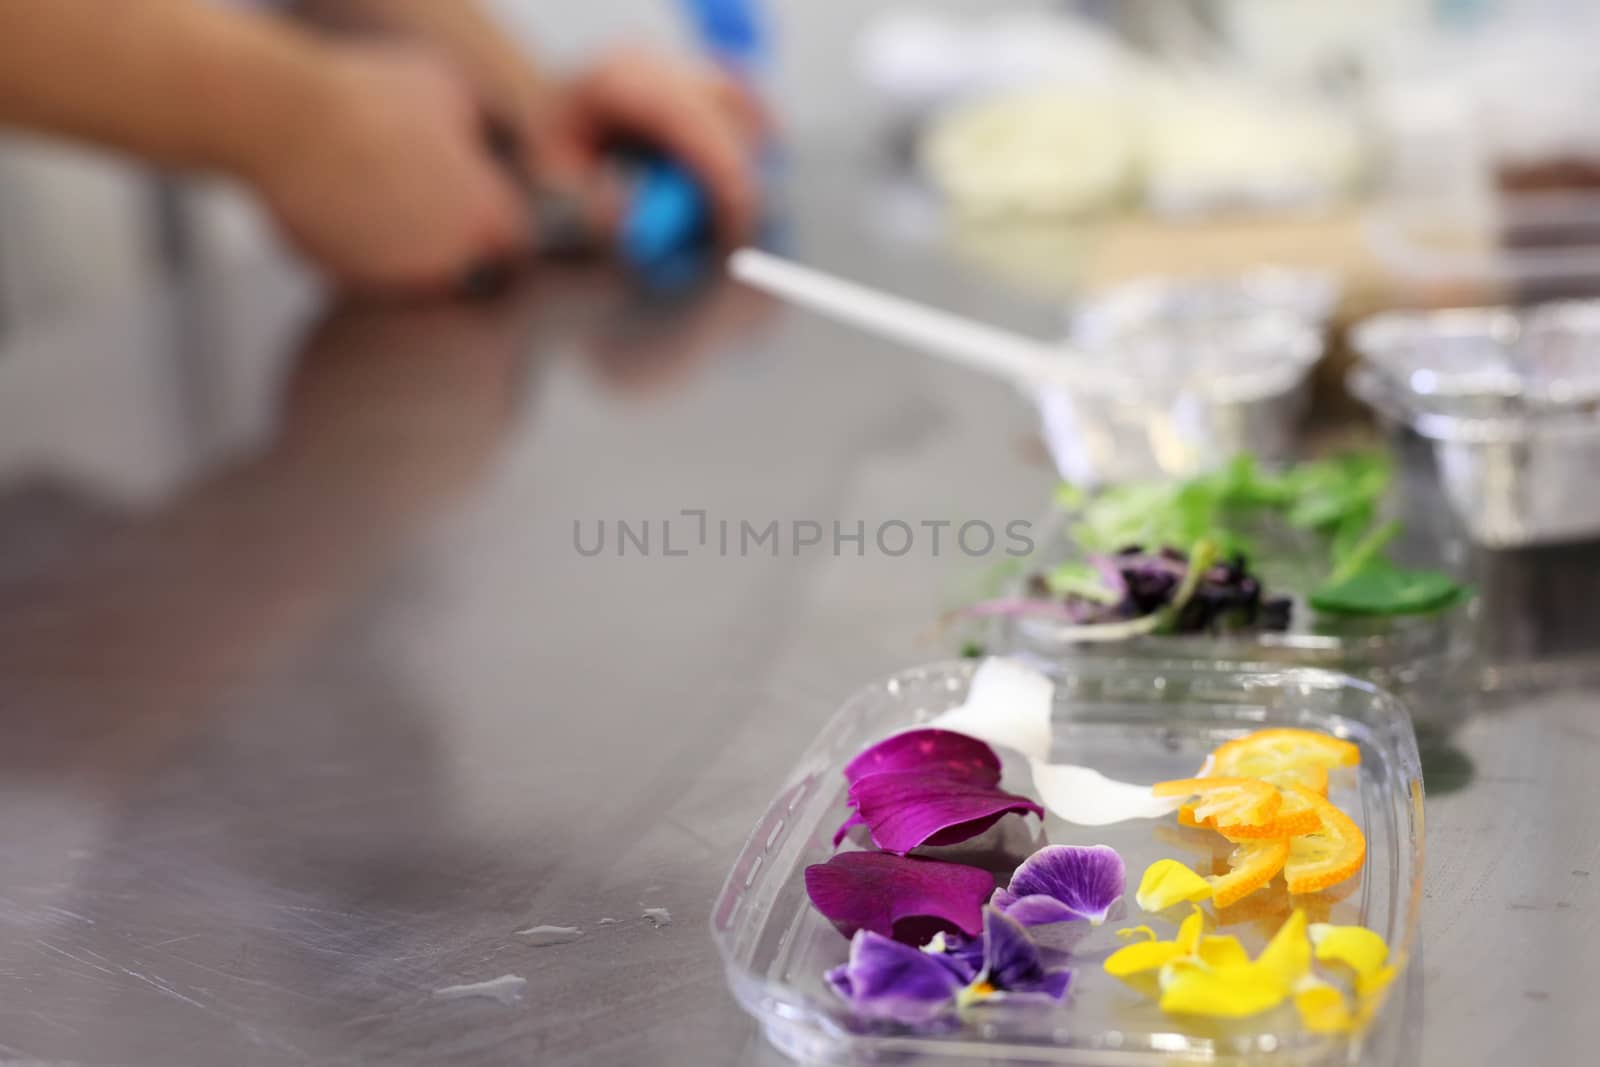 A chef blurred preparing food in restaurant